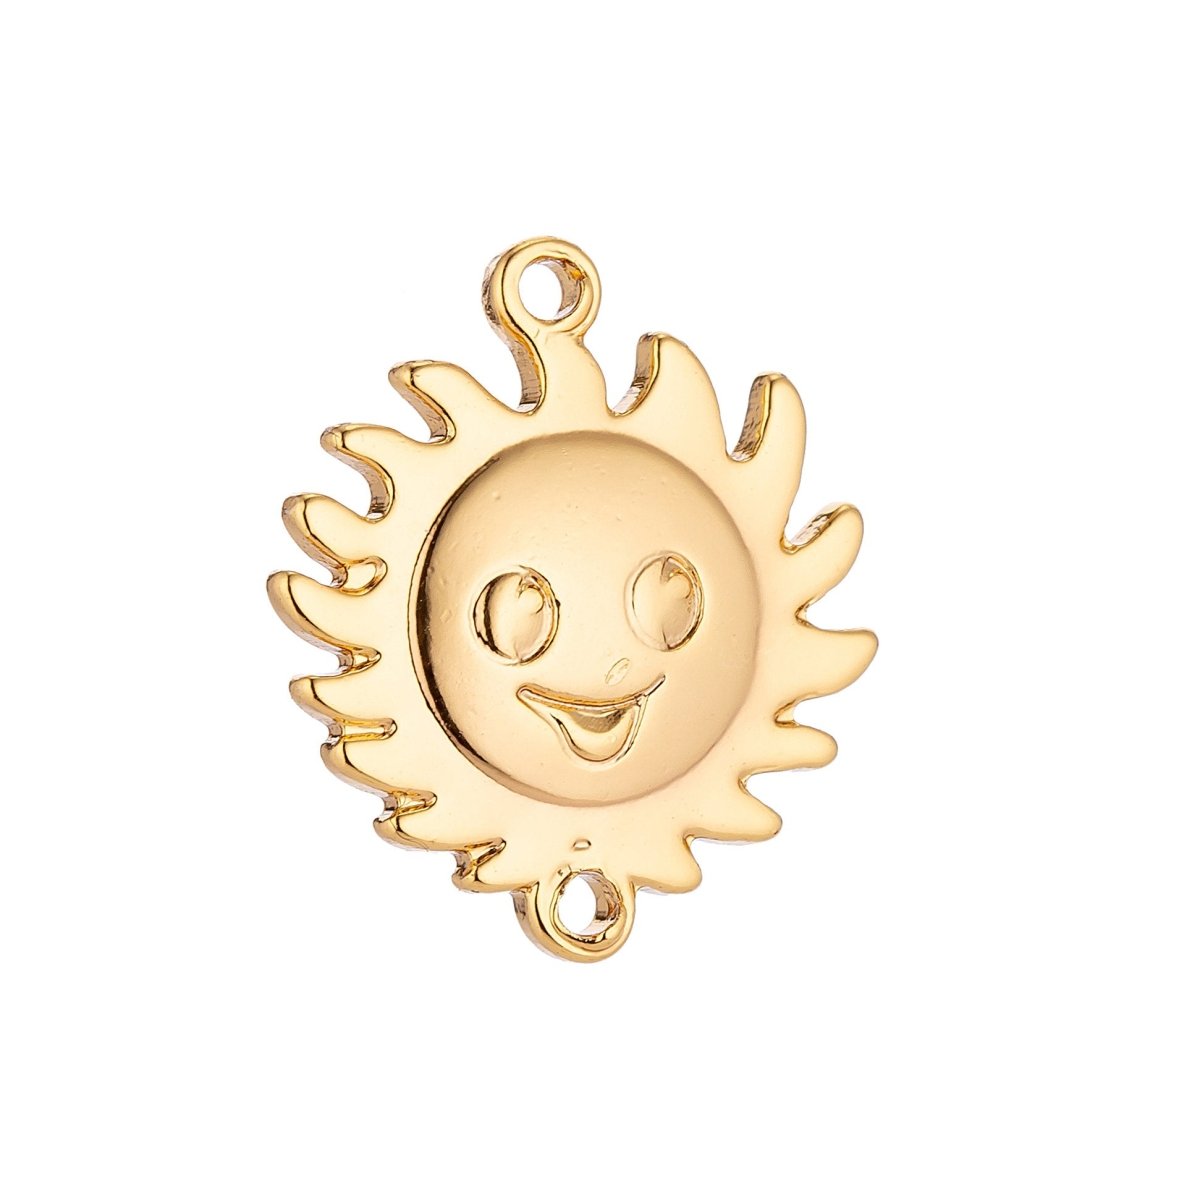 Gold Filled Sun Face Charm, Sunshine Charm Connector Pendant, Happy Smile Sun Face, Gold Sun Charm, Wholesale Gold Filled Connector Charms F-048 - DLUXCA